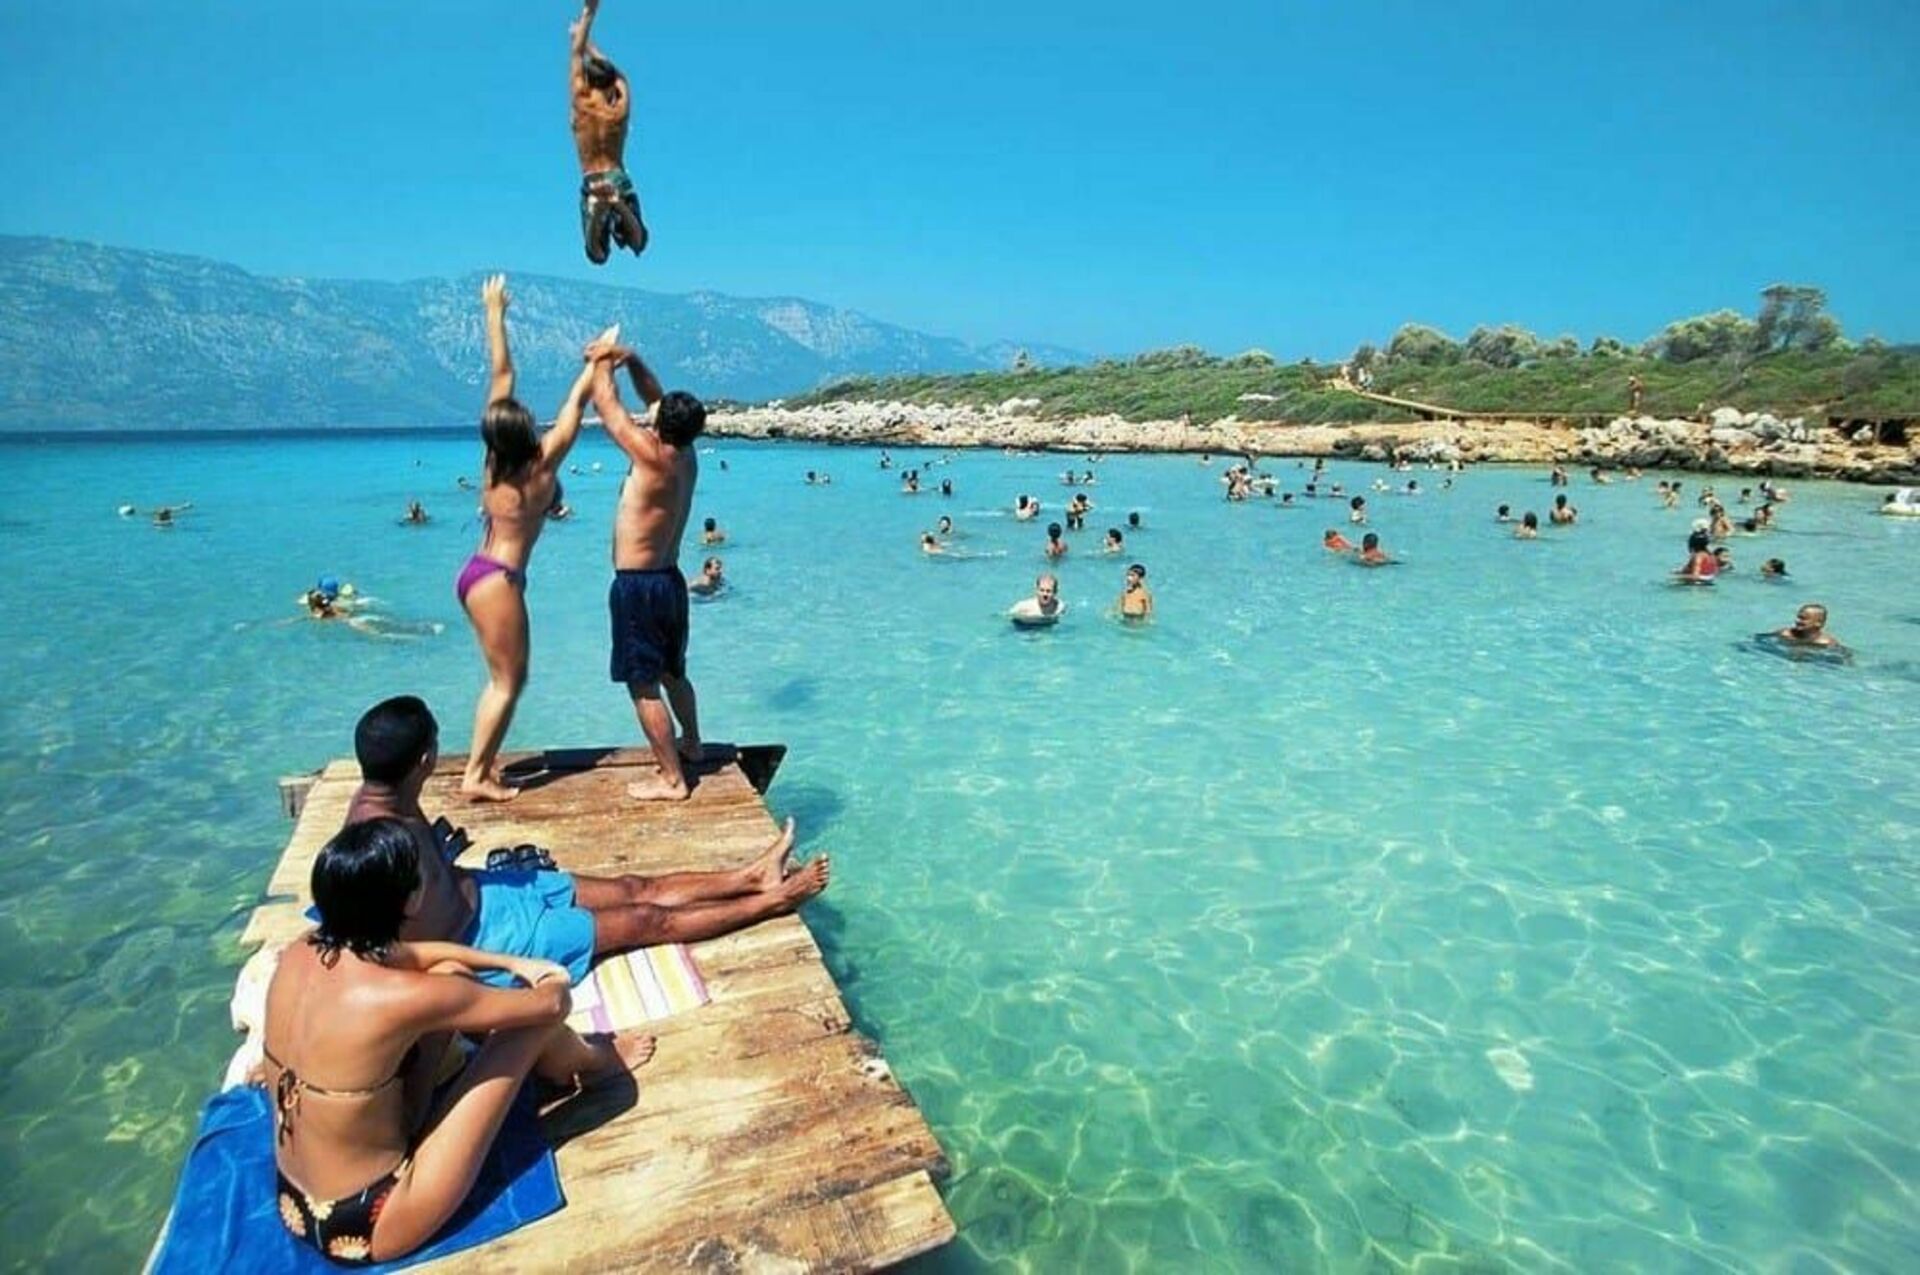 Travel турция. Турецкая Ибица Мармарис. Туристы в Турции. Турция пляж. Турция туризм.